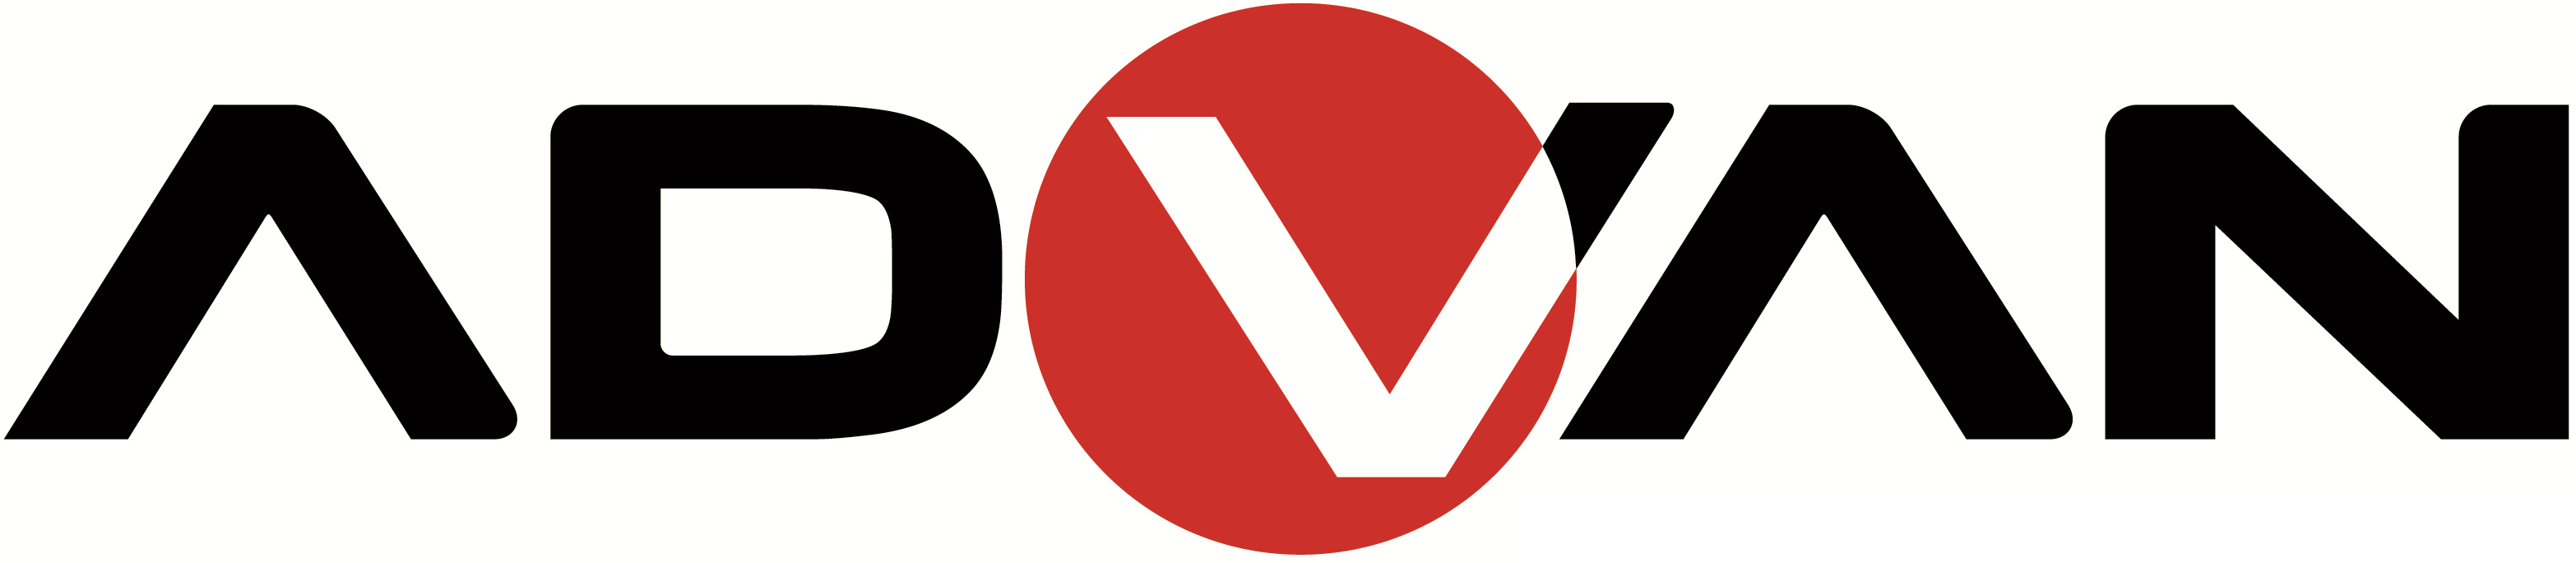 Advan - Logopedia, the logo and branding site